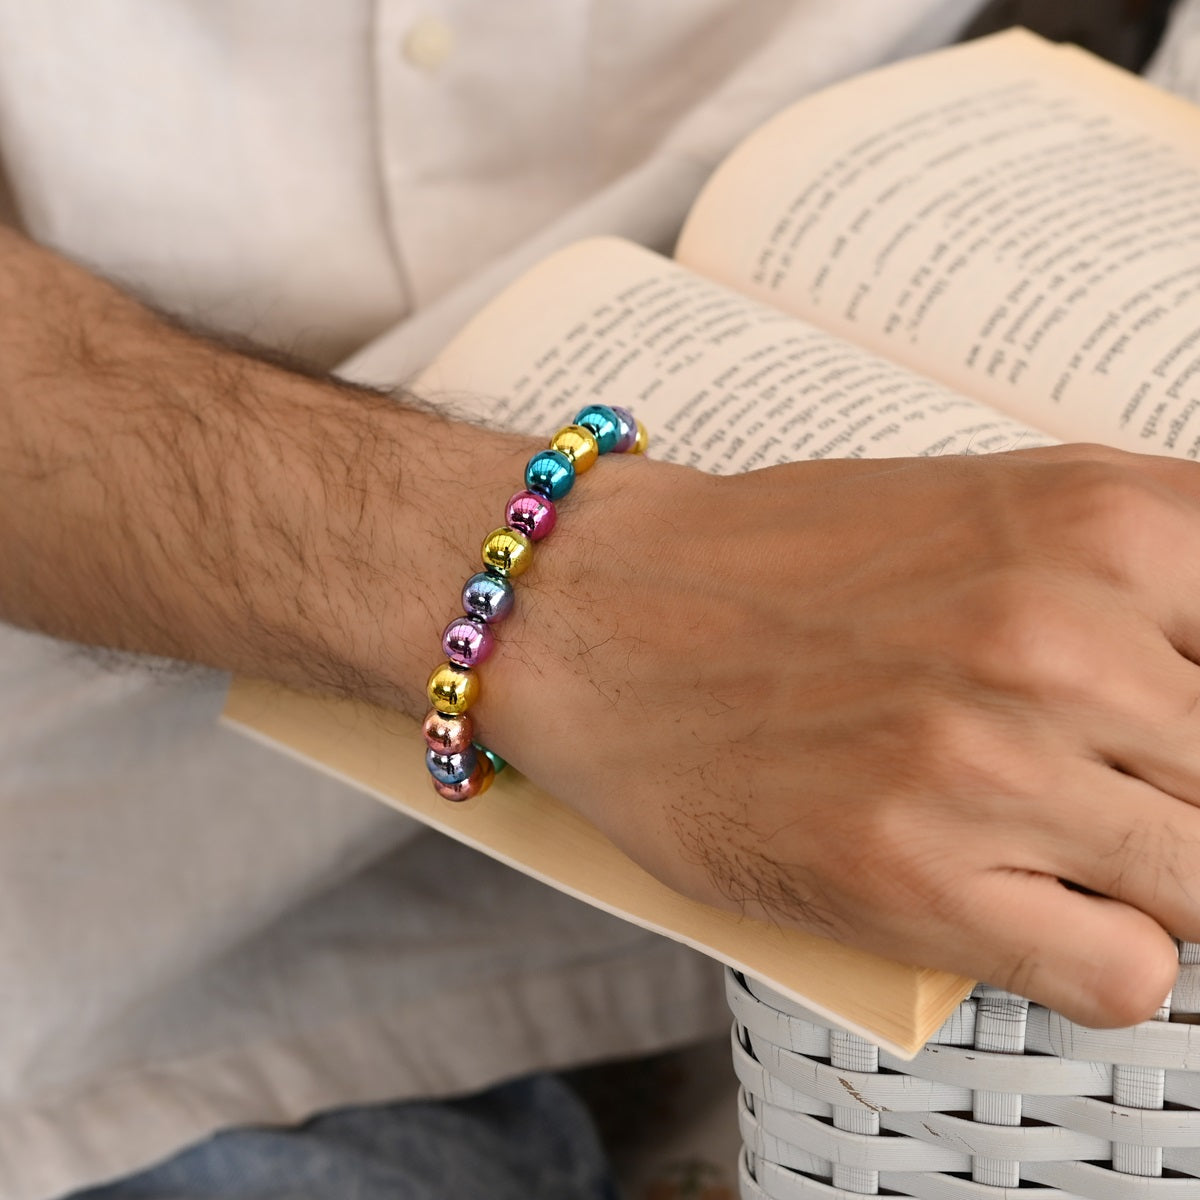 Multicolor Hematite Harmony Stretch Bracelet on wrist - Stylish and vibrant accessory